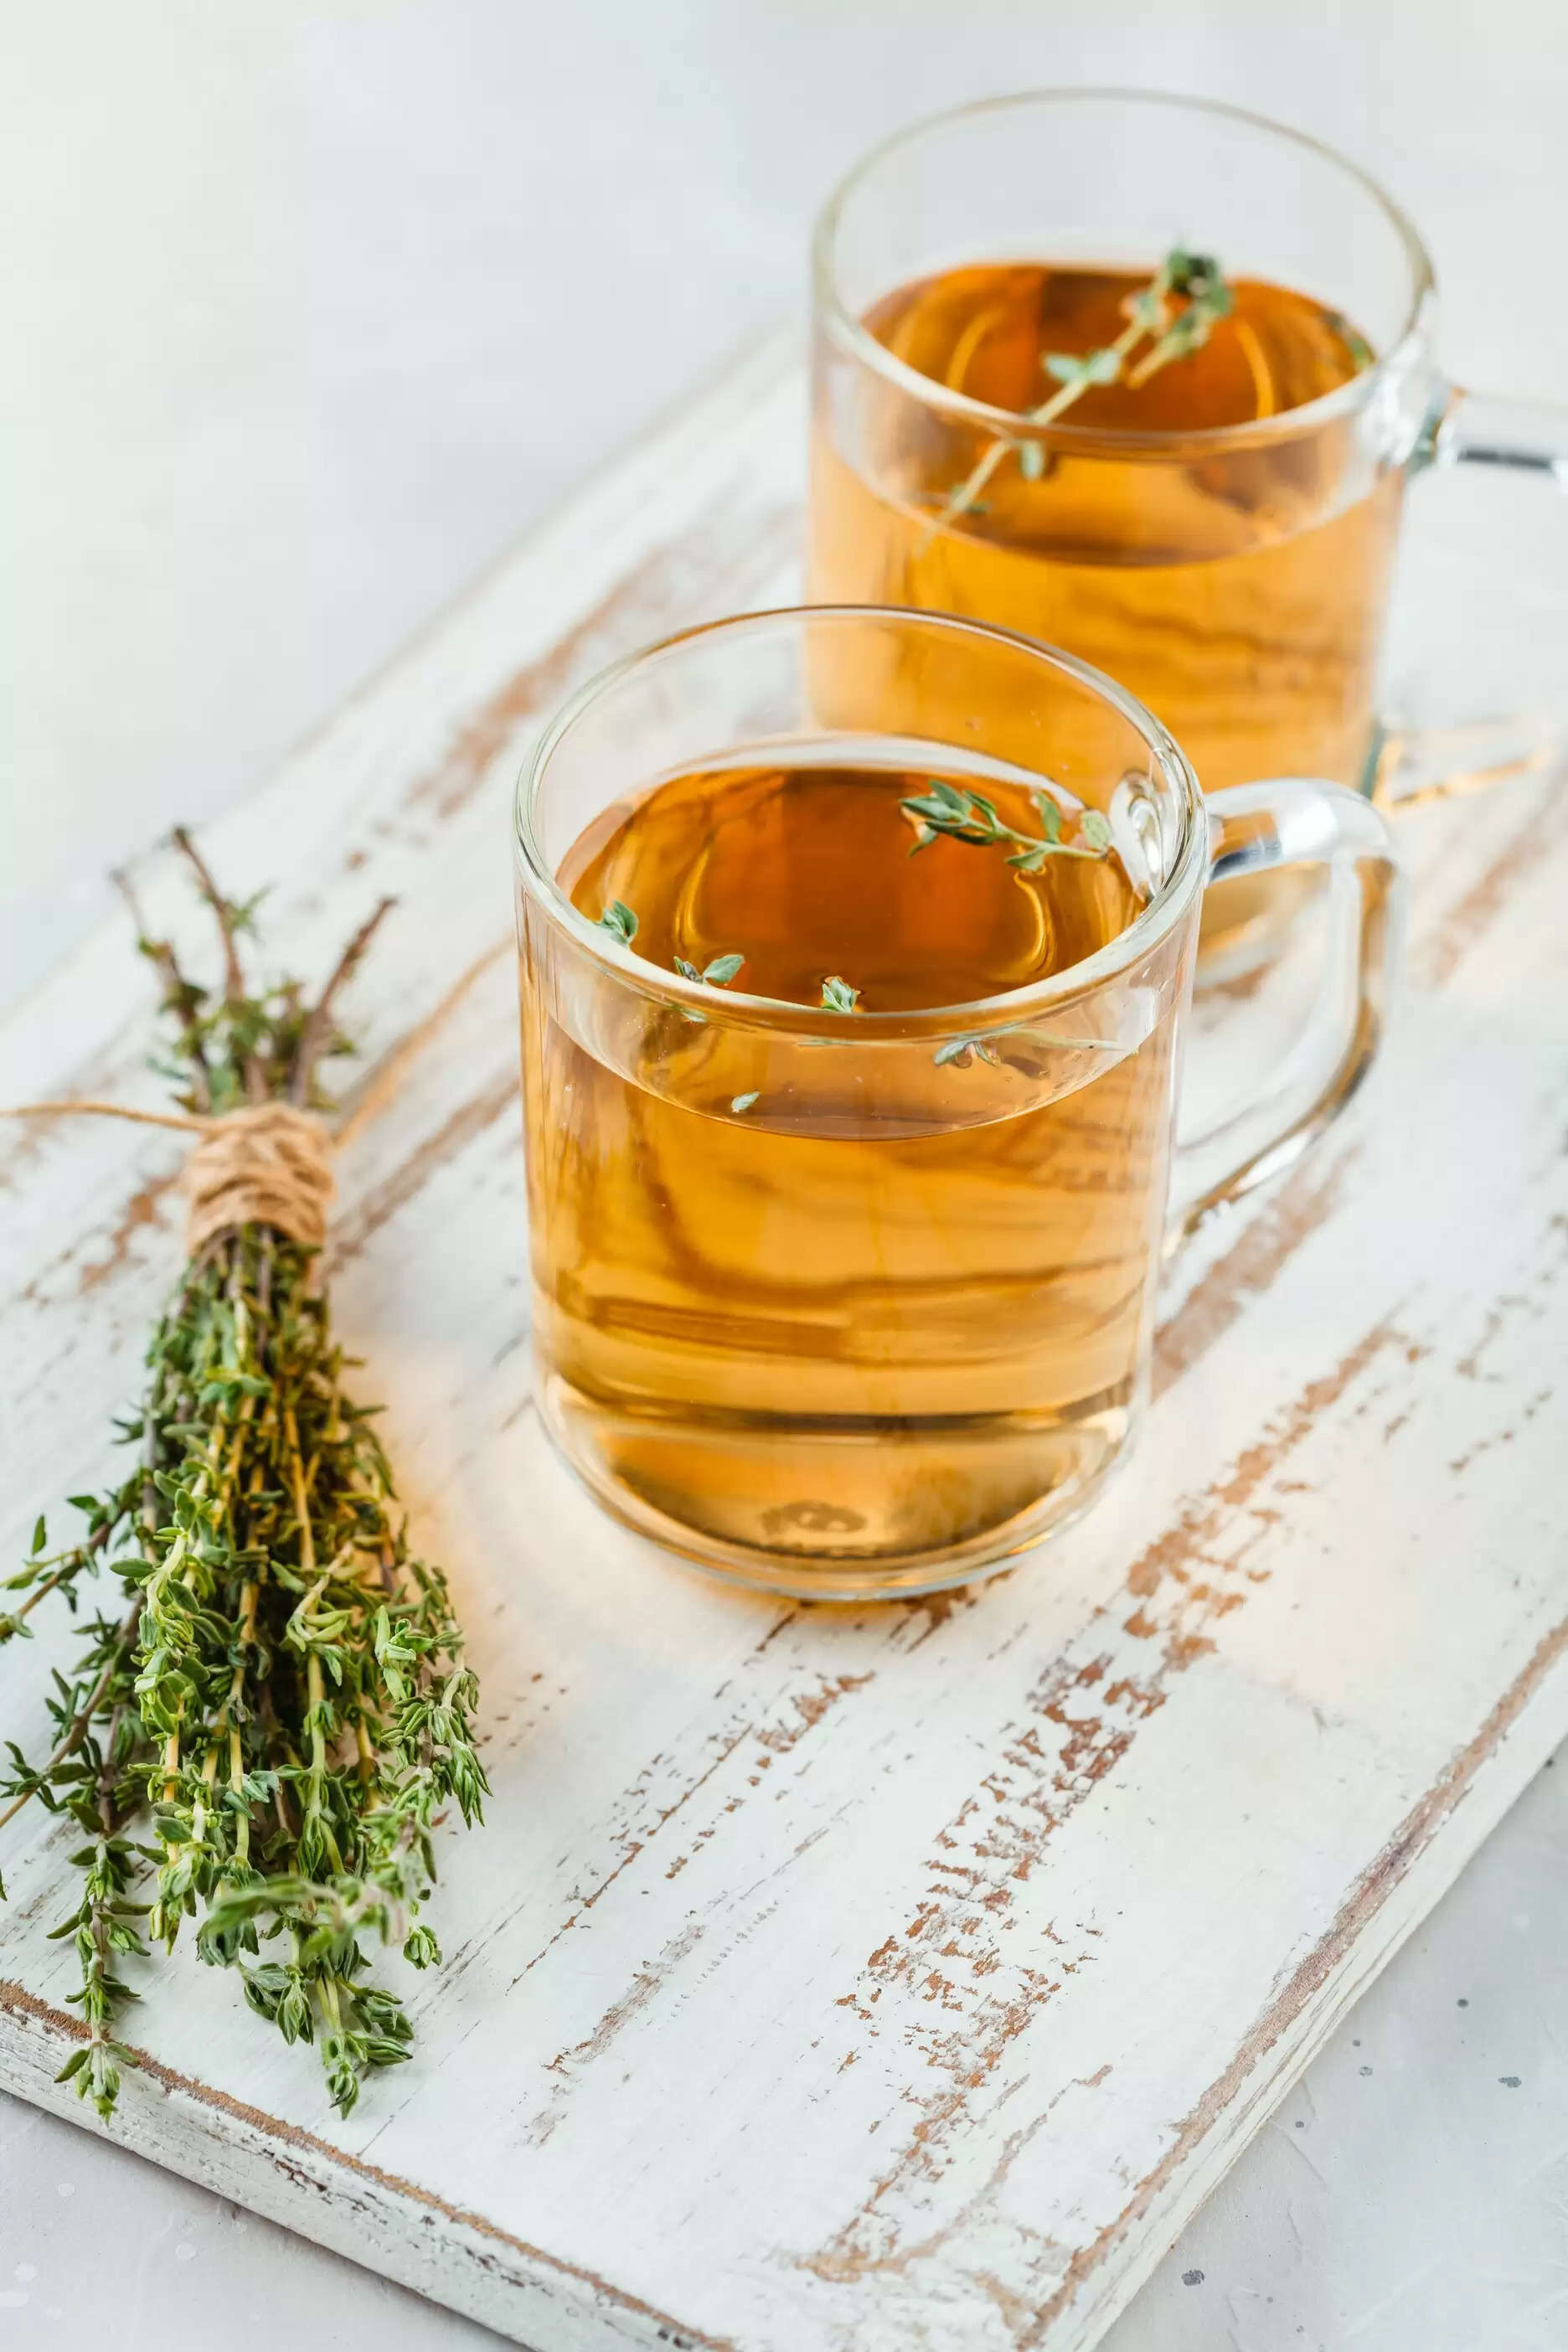 Lemongrass Tea: Benefits Of Drinking This Aromatic Tea